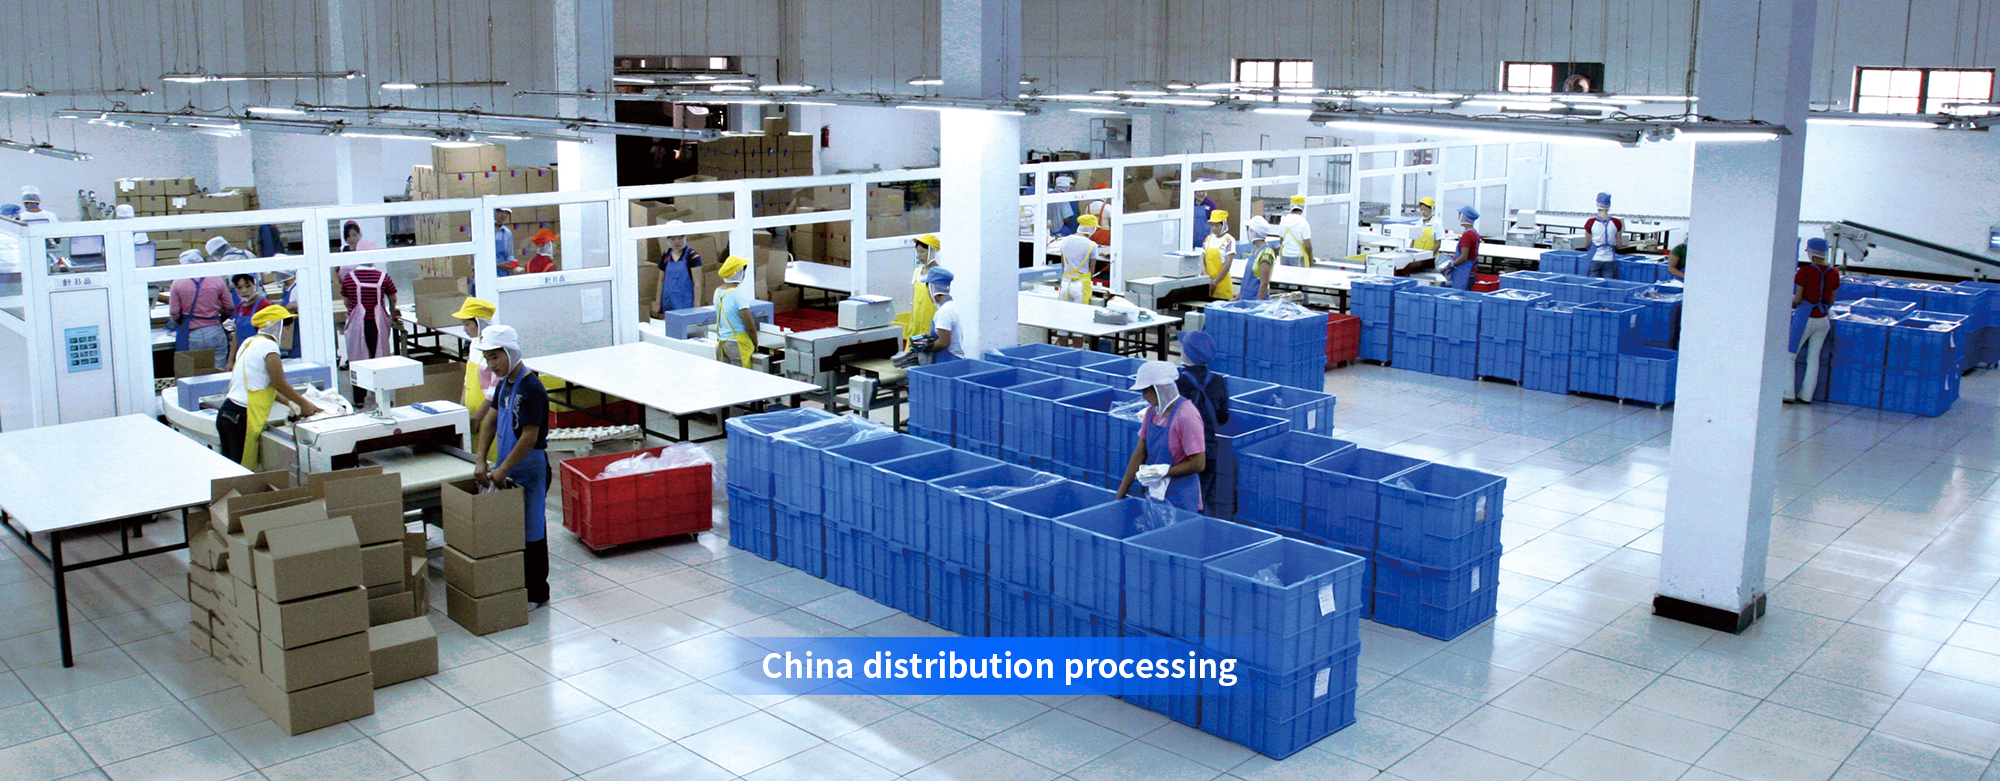 China distribution processing